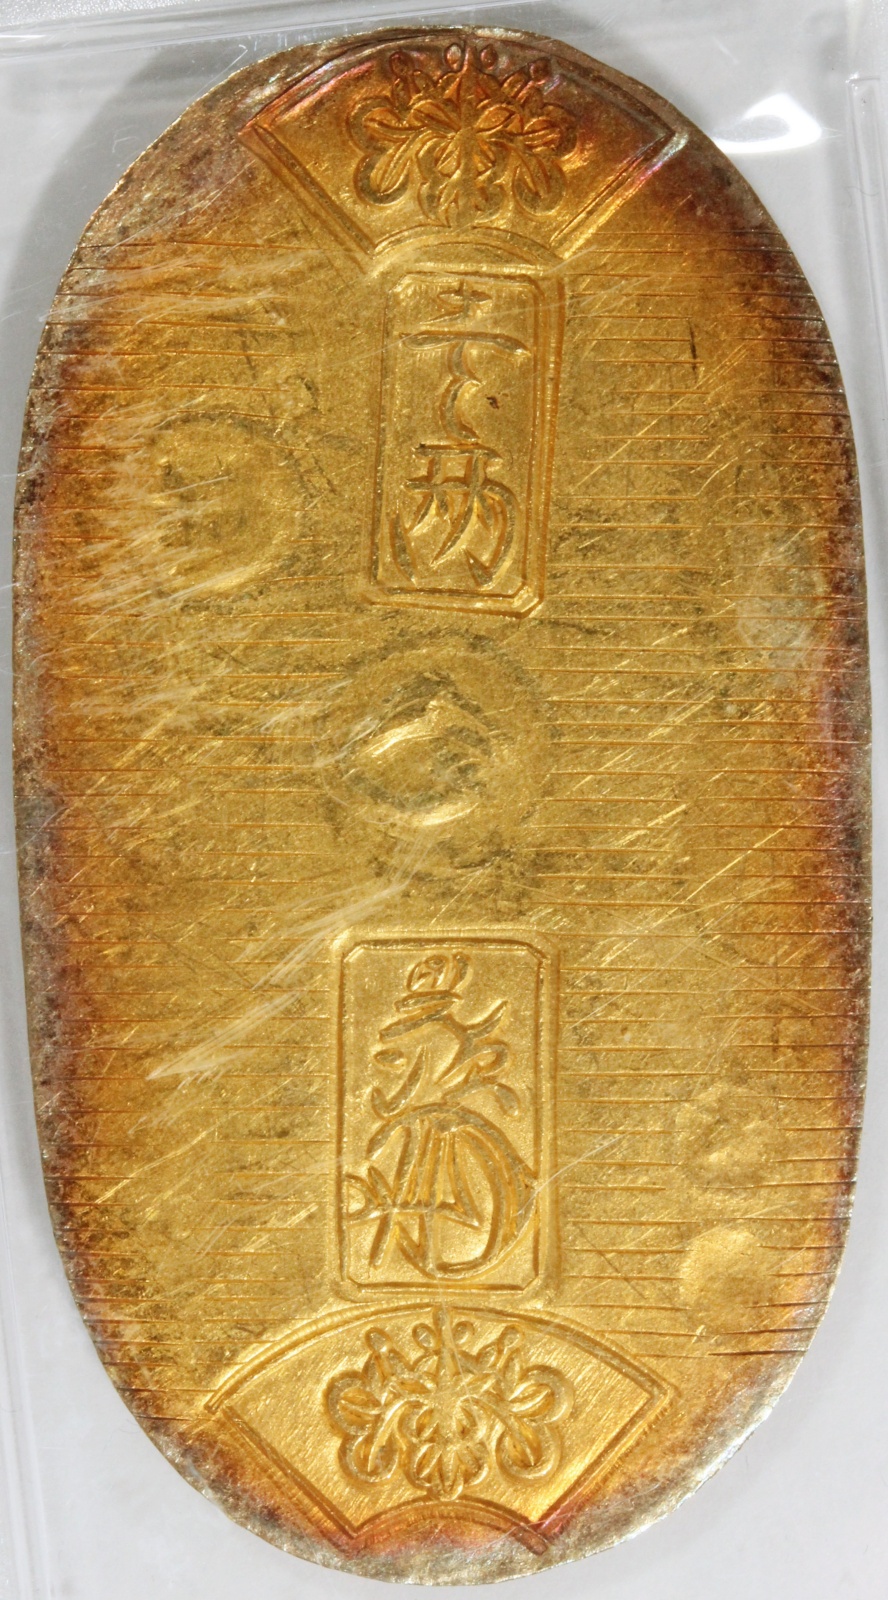 天保小判金 極美品 無刻印 PCGS AU55 1837-1858年 古銭 コイン 